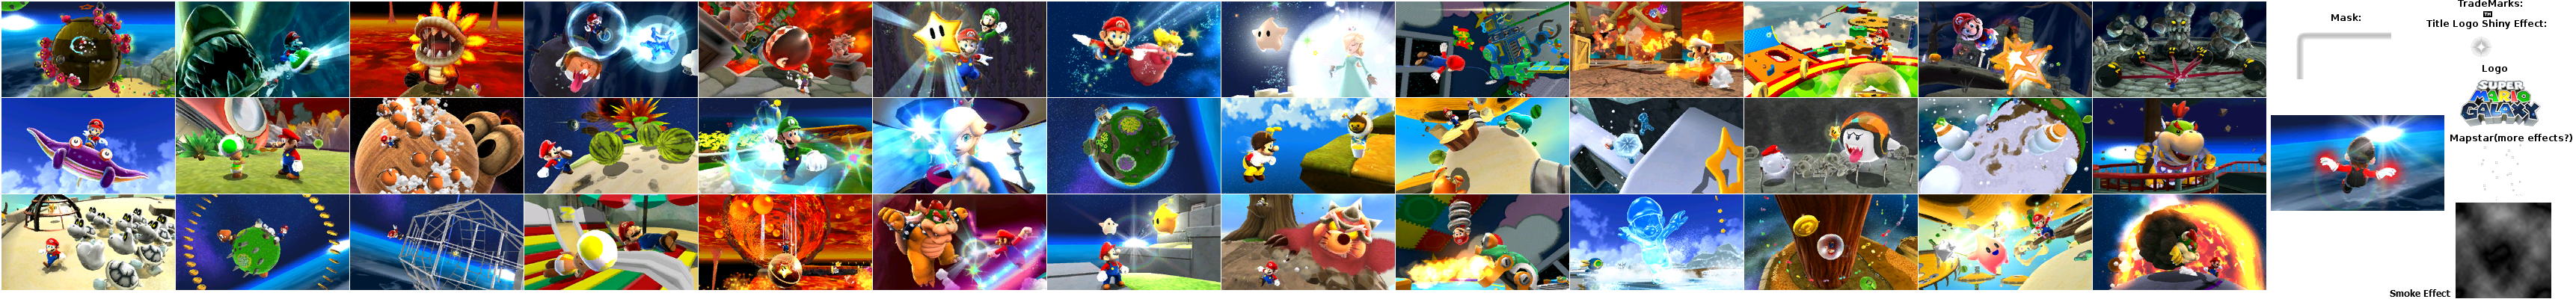 Super Mario Galaxy - Staff Images